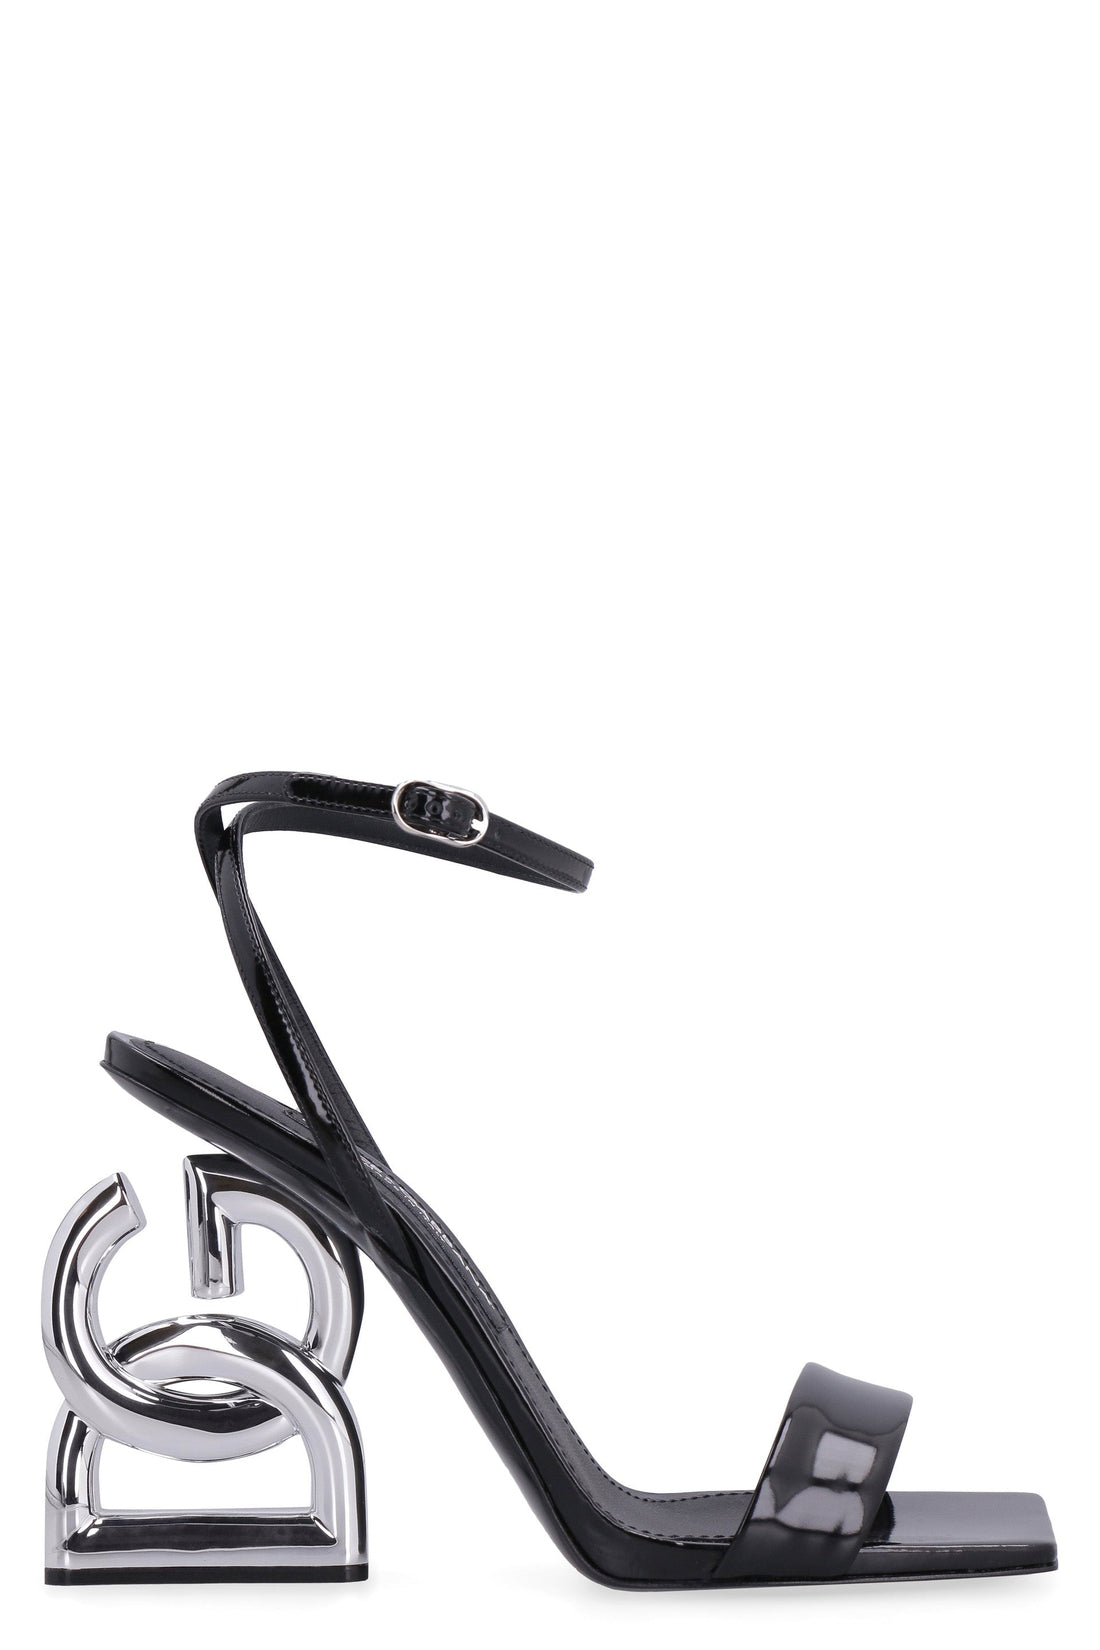 Dolce & Gabbana-OUTLET-SALE-3.5 heeled sandals-ARCHIVIST